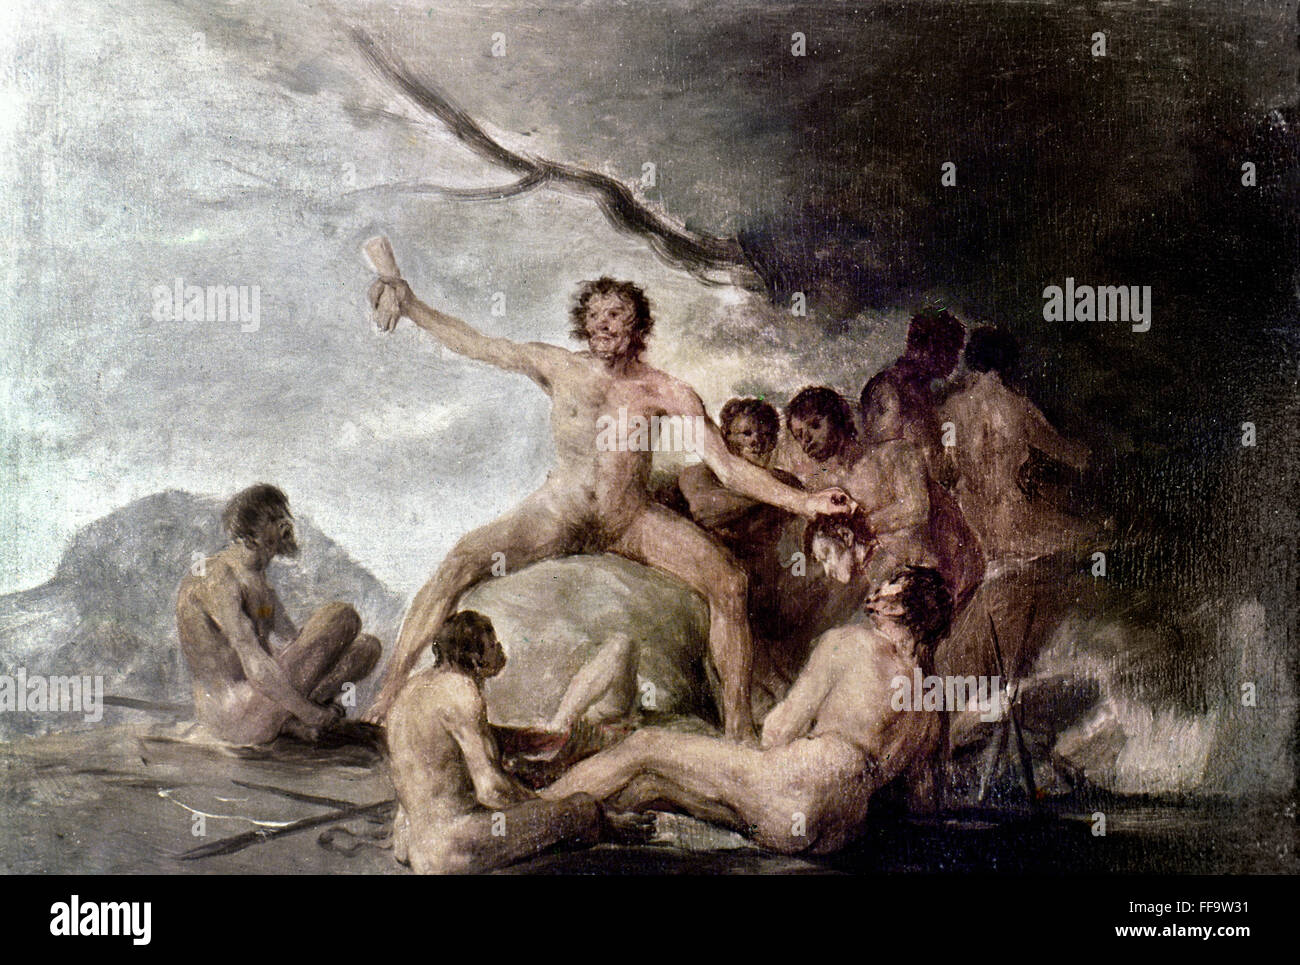 GOYA: KANNIBALEN-SZENE. NUM-Kannibalen-Szene, von Francisco Goya. Leinwand. Stockfoto